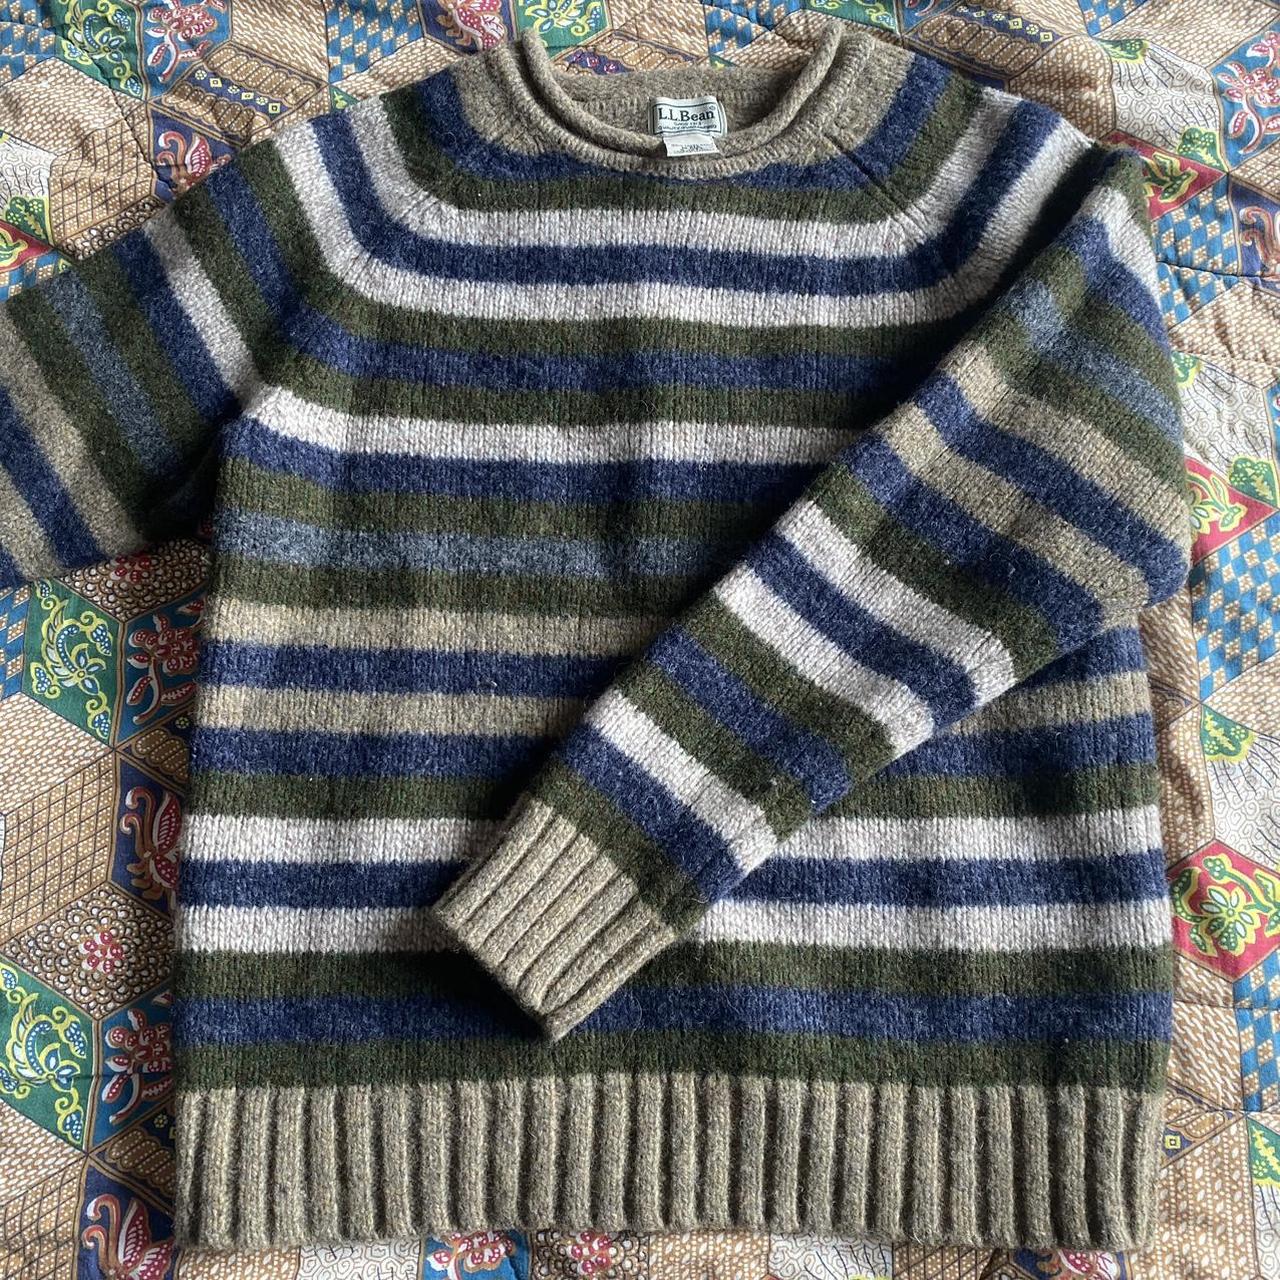 Vintage Wool L.L.Bean Sweater - 100% lambs’ wool -... - Depop